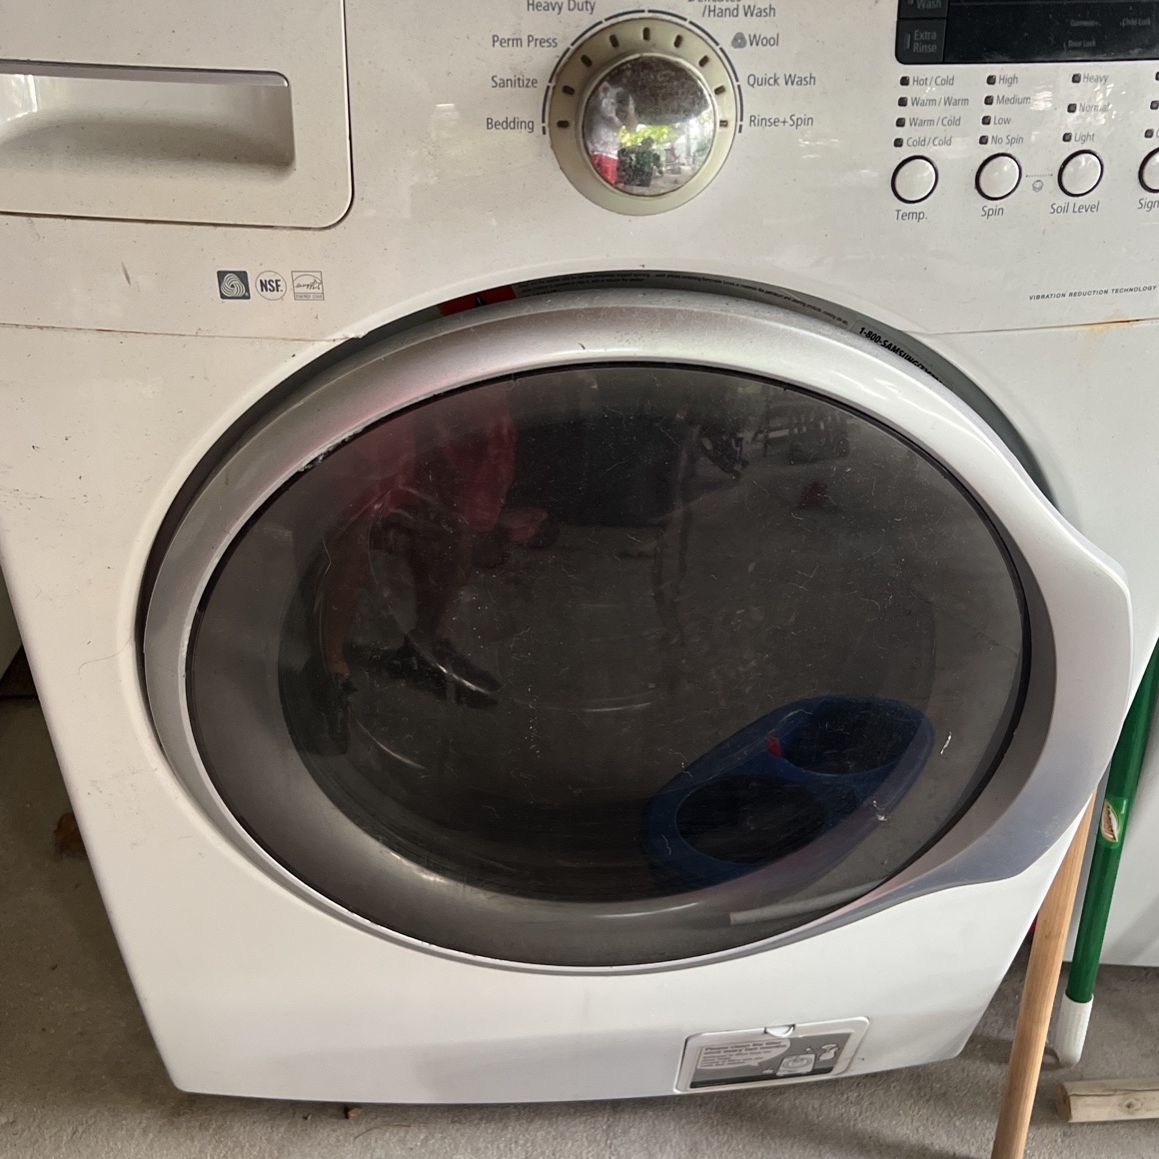 Samsung Washer Dryer Combo 